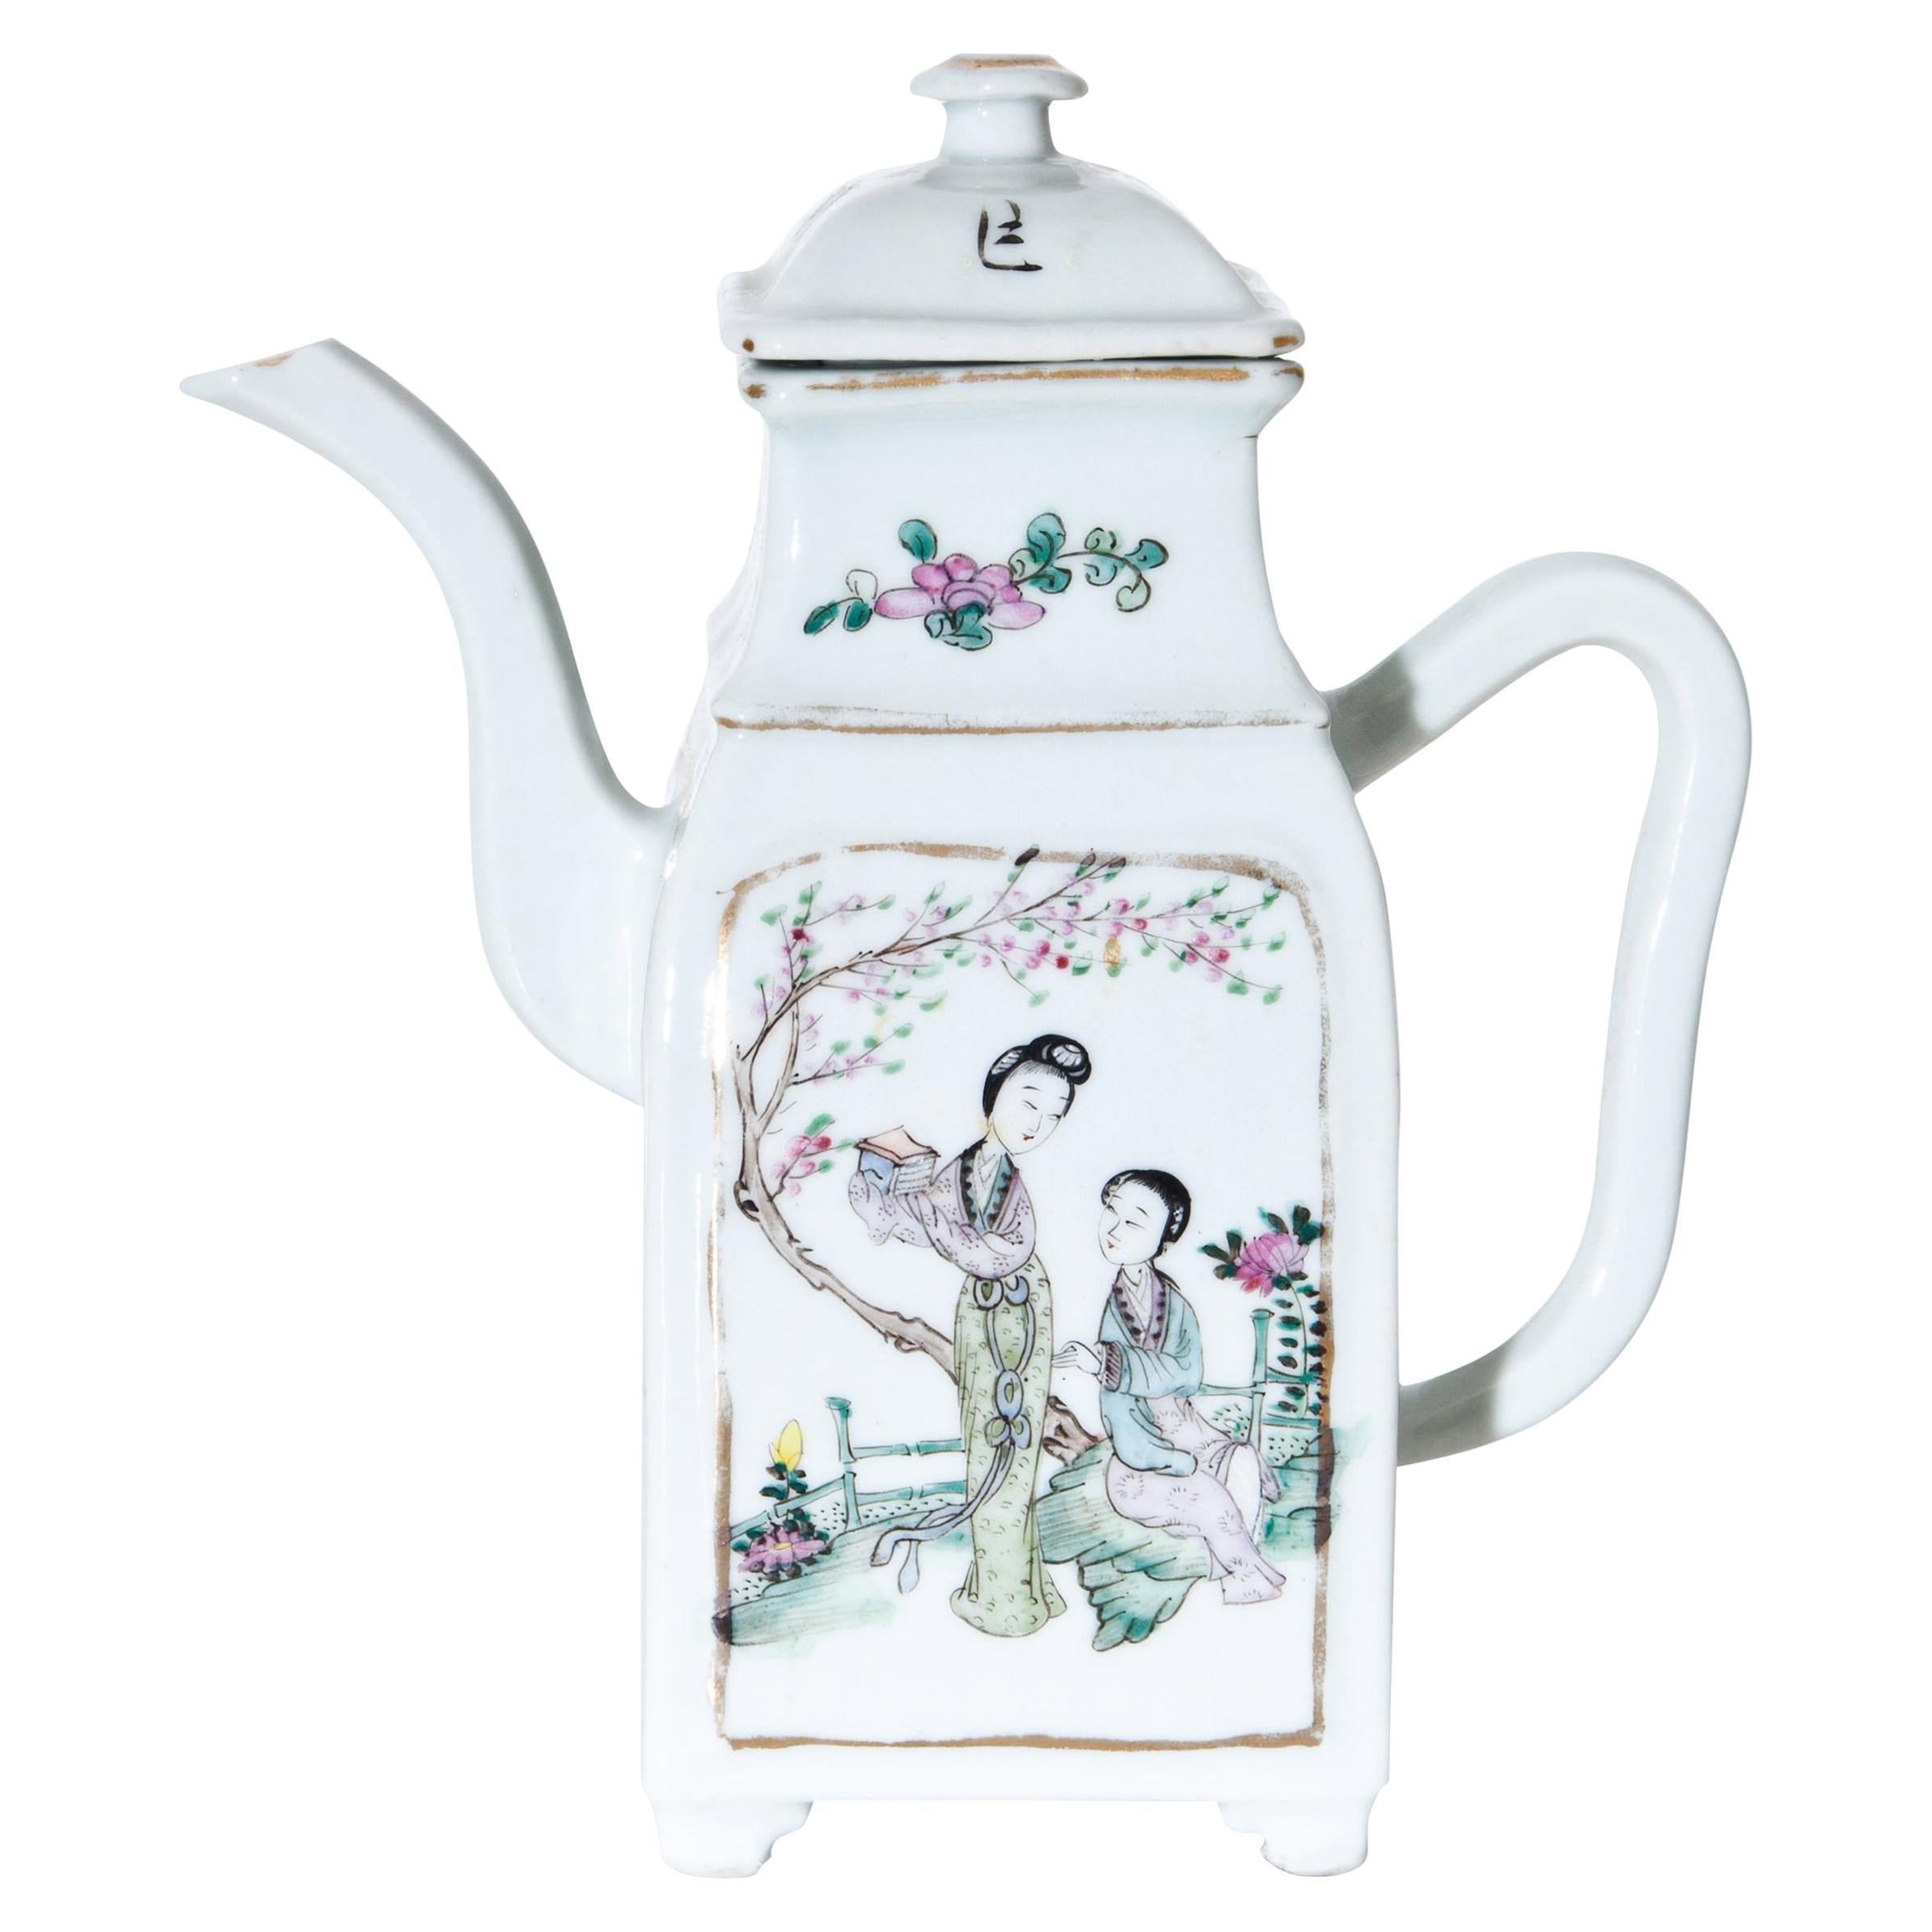 Tongzhi Porcelain Teapot, China, 19th Century